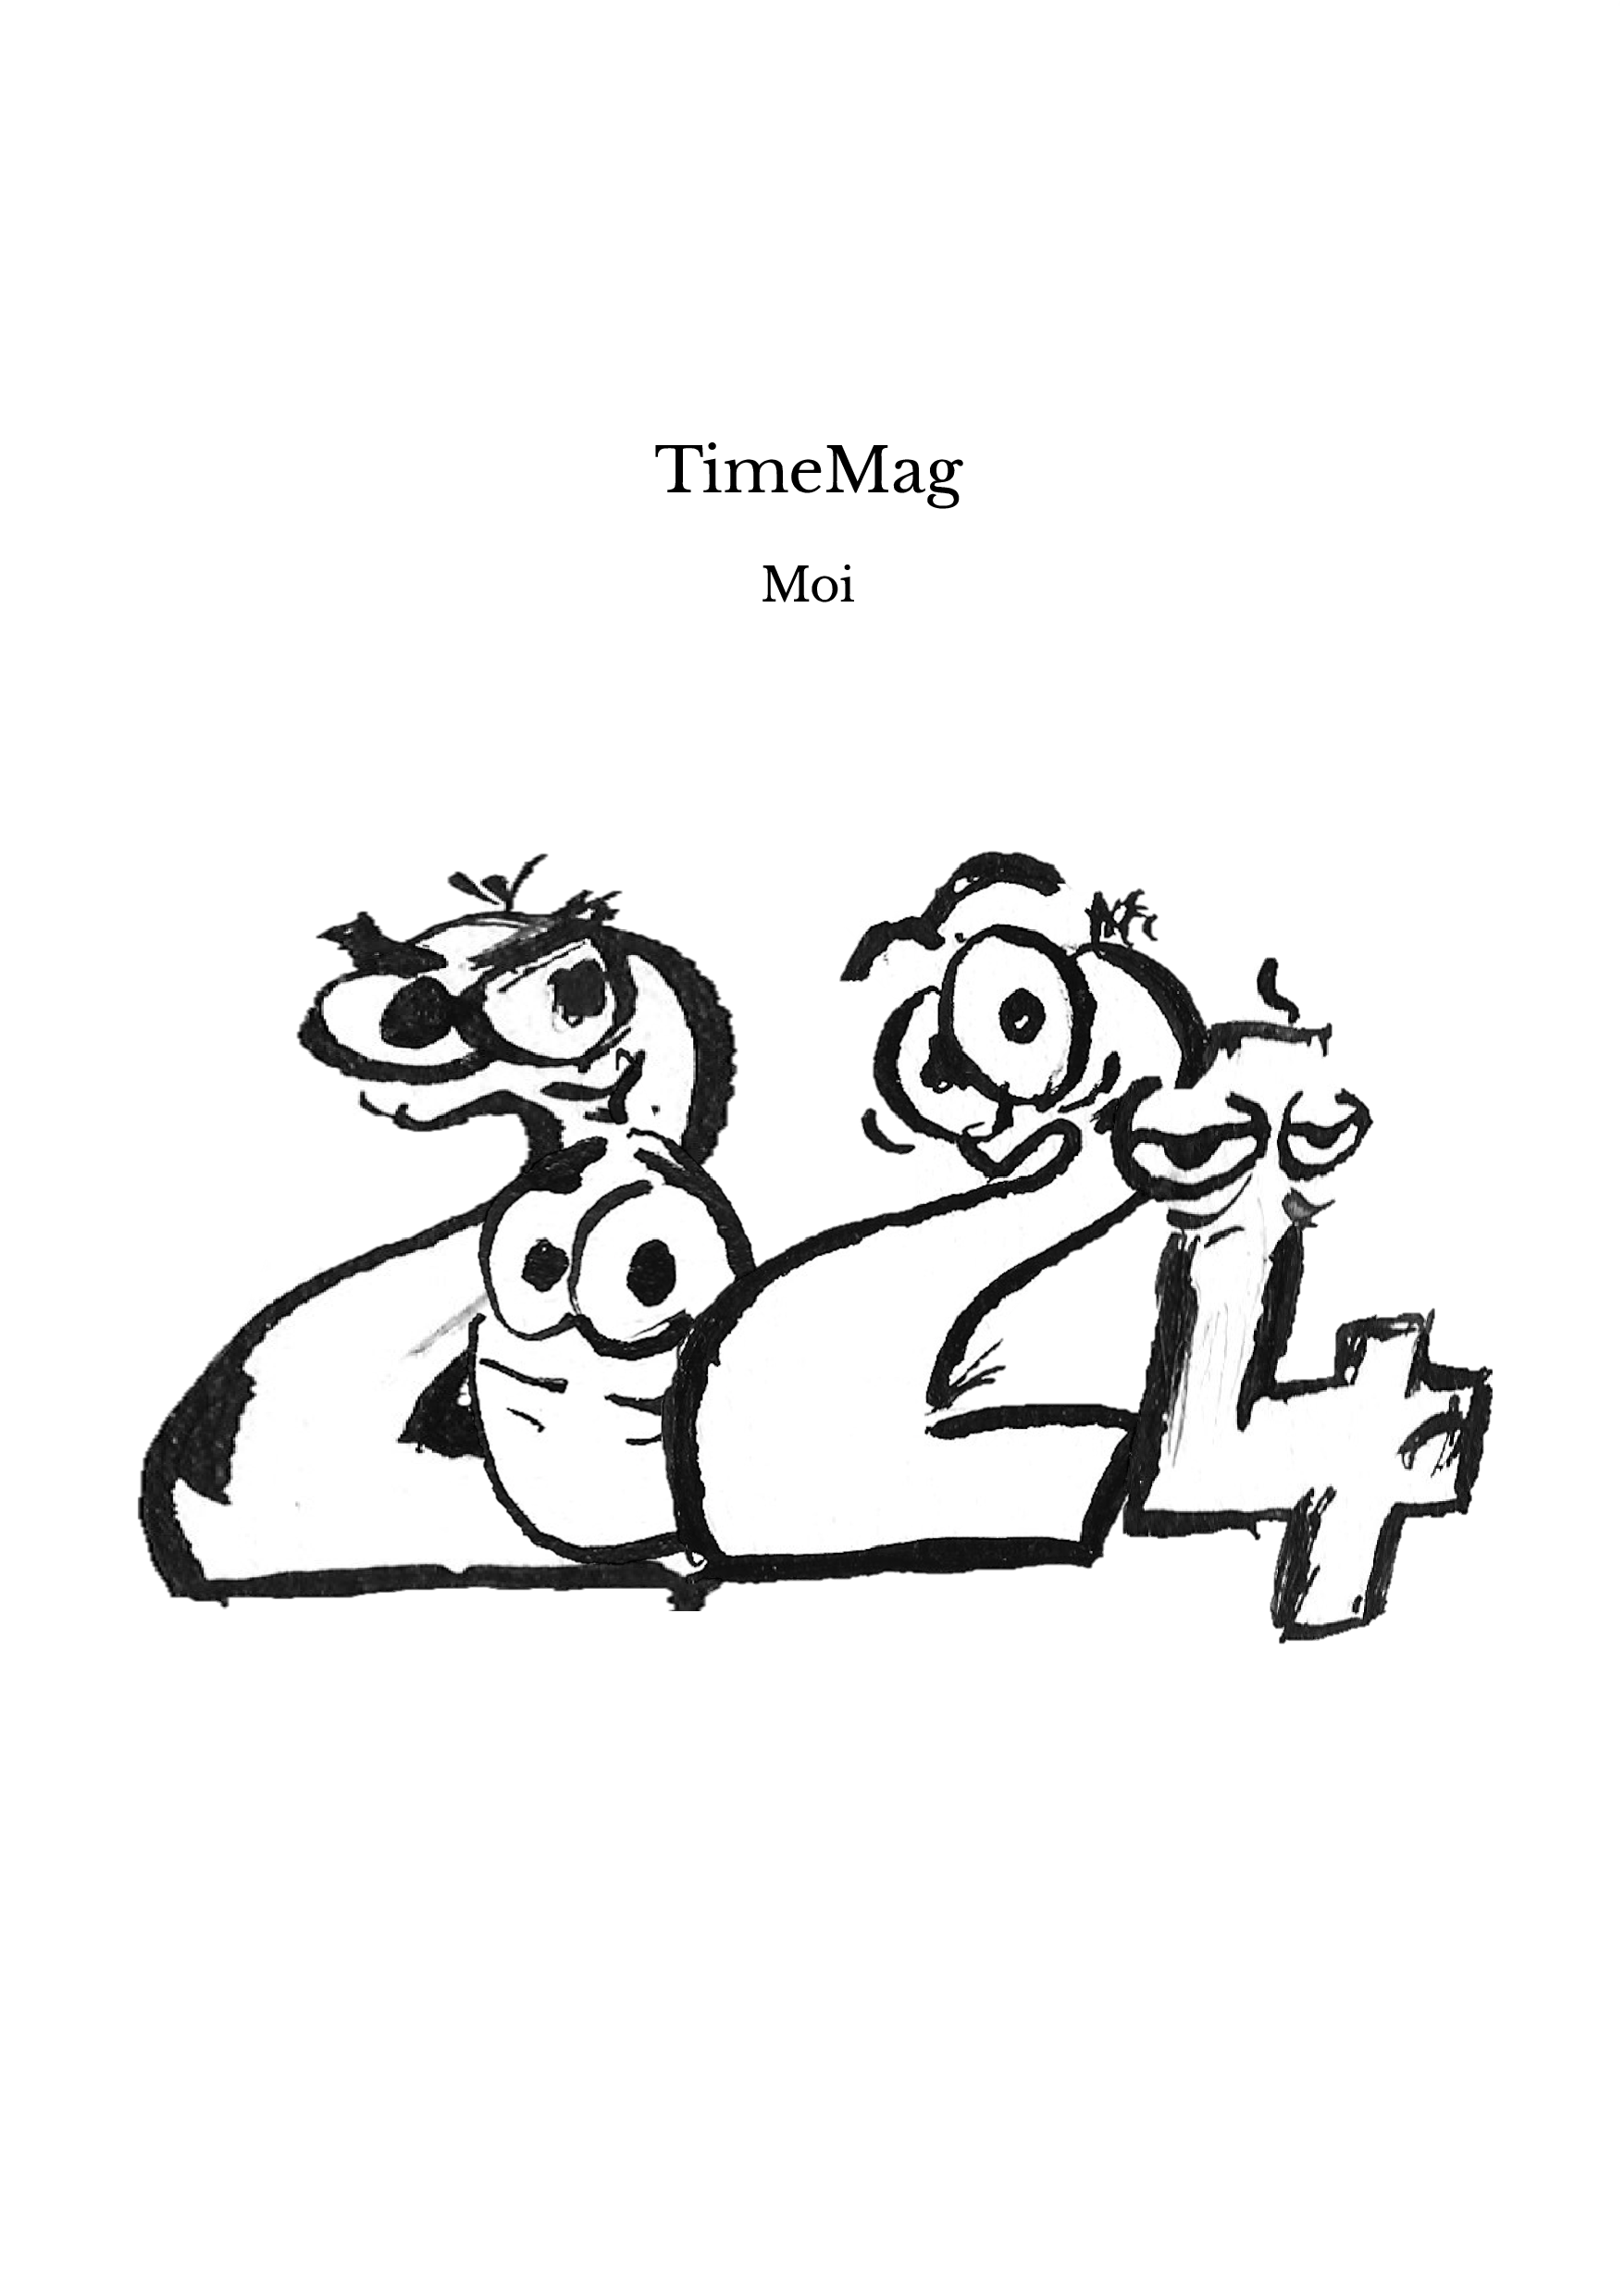 TimeMag